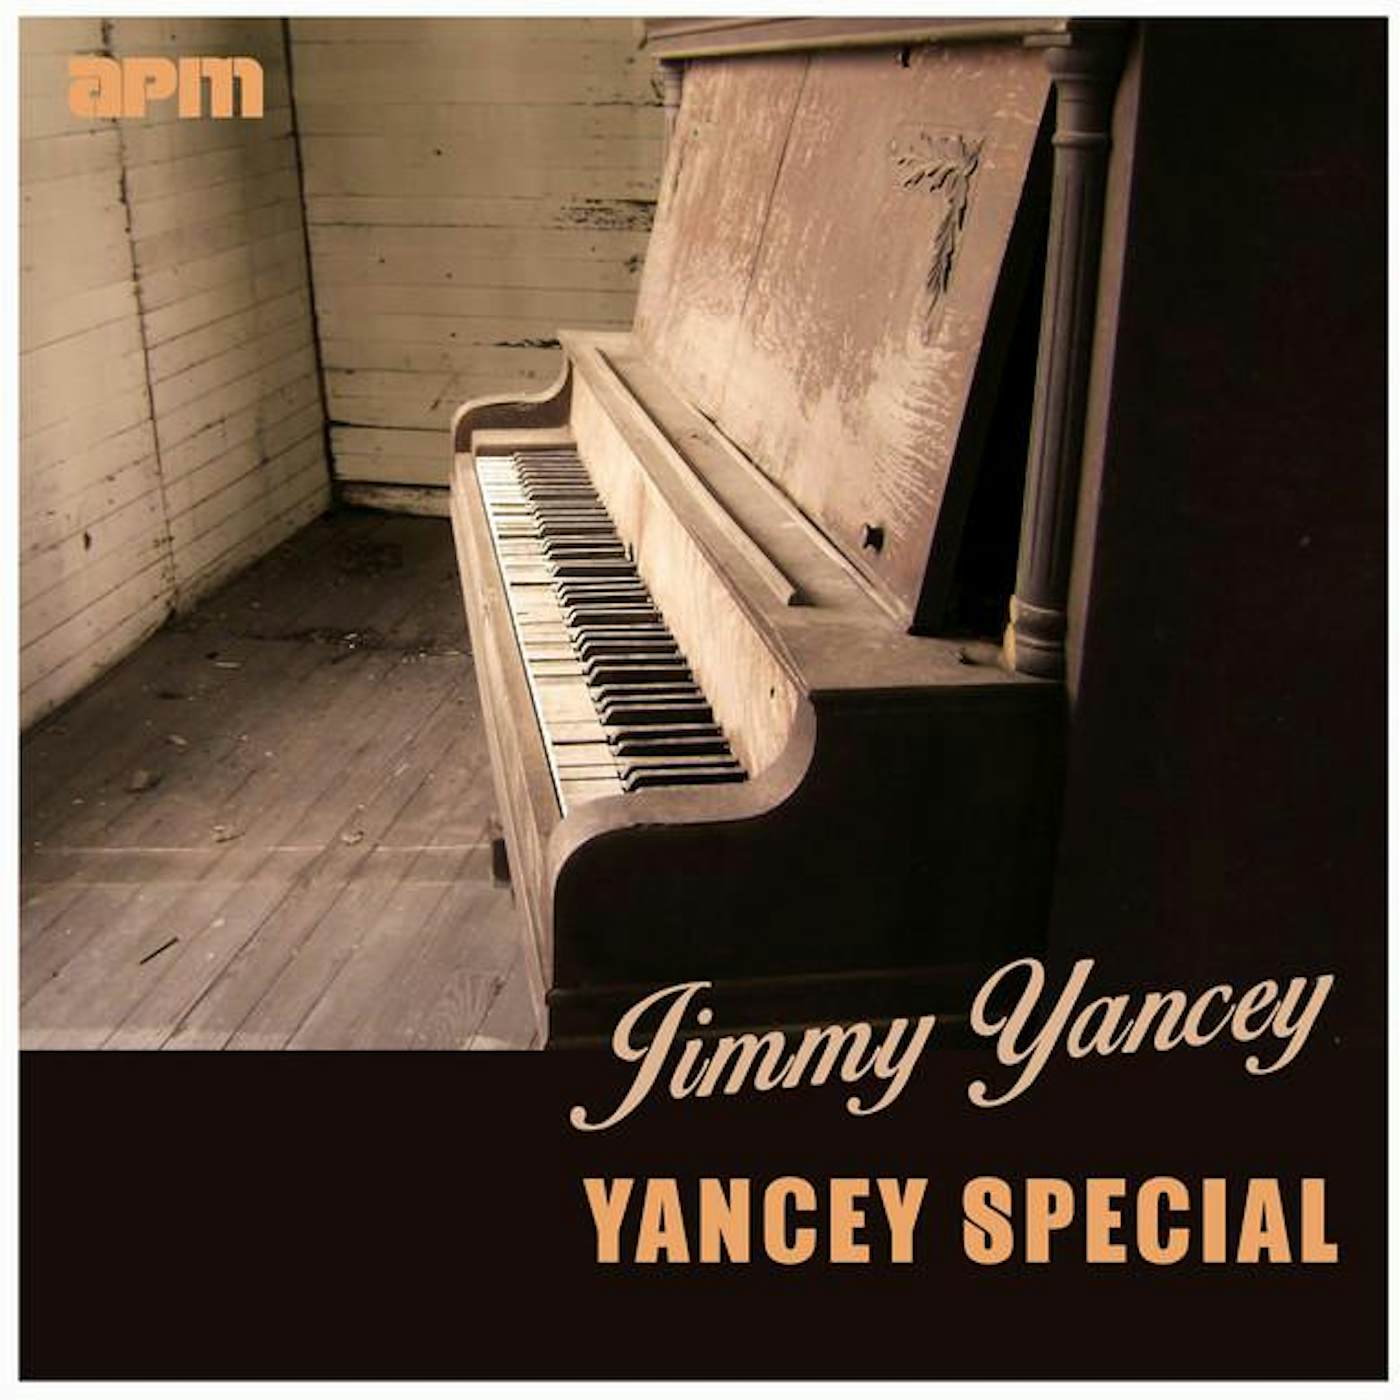 Jimmy Yancey